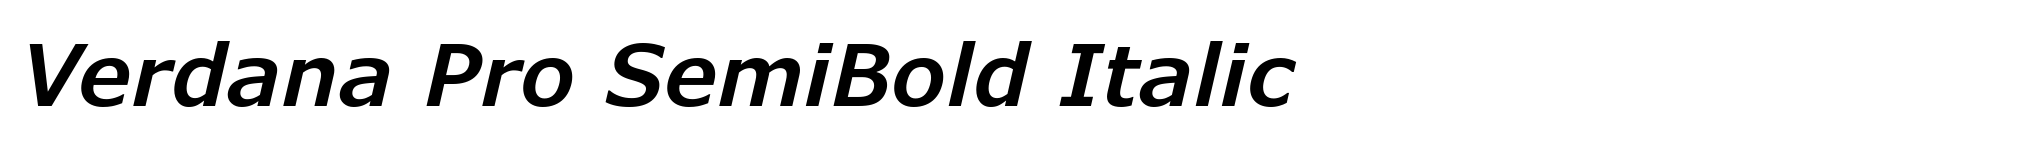 Verdana Pro SemiBold Italic image